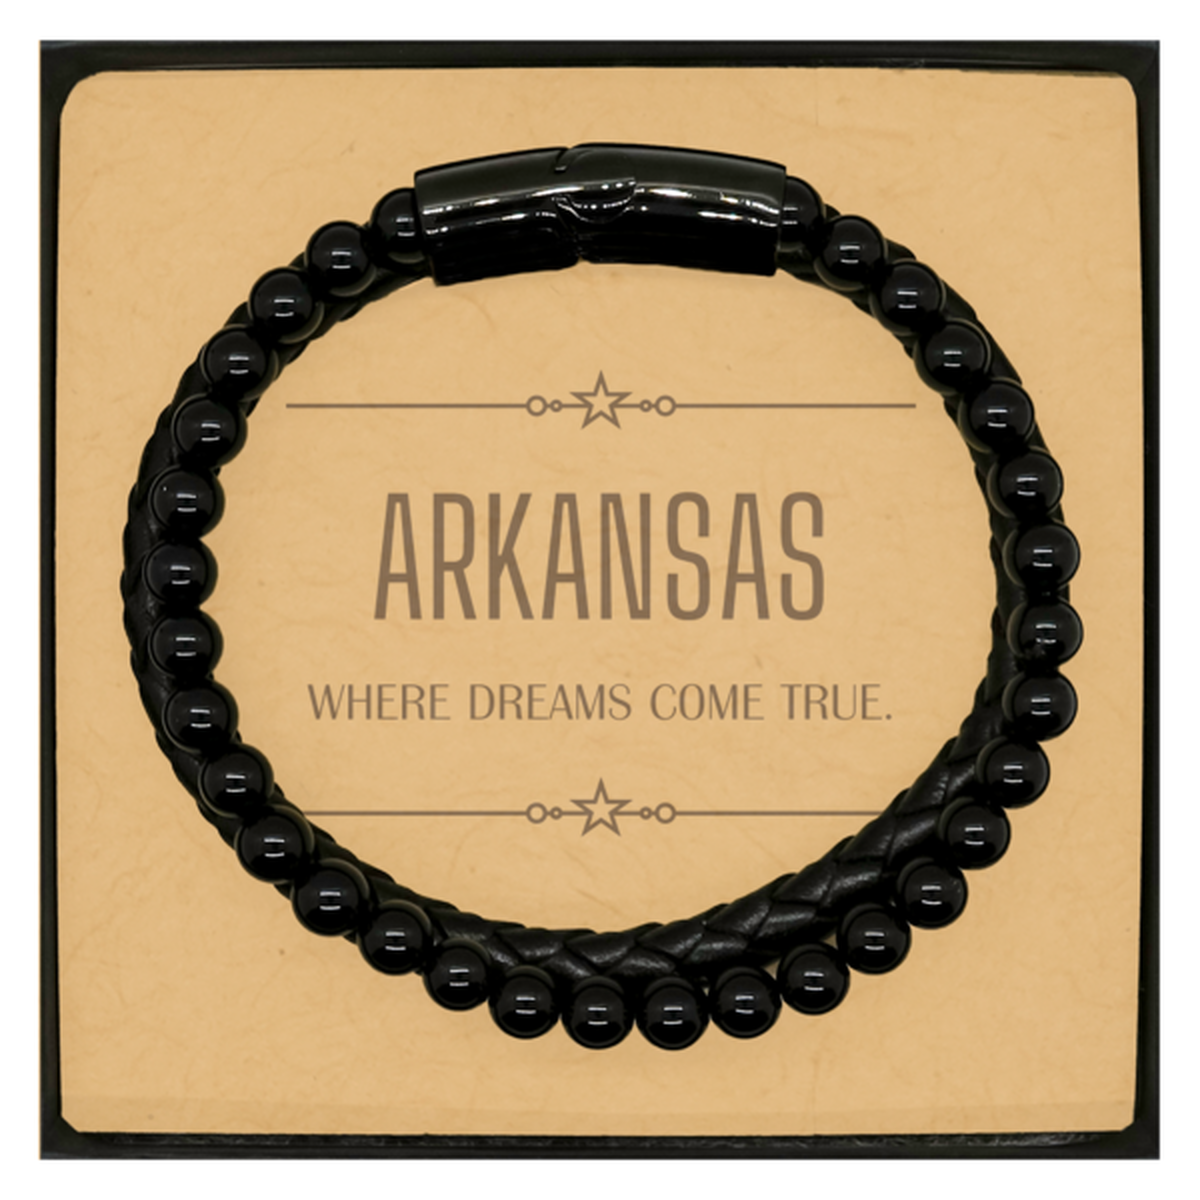 Love Arkansas State Stone Leather Bracelets, Arkansas Where dreams come true, Birthday Christmas Inspirational Gifts For Arkansas Men, Women, Friends